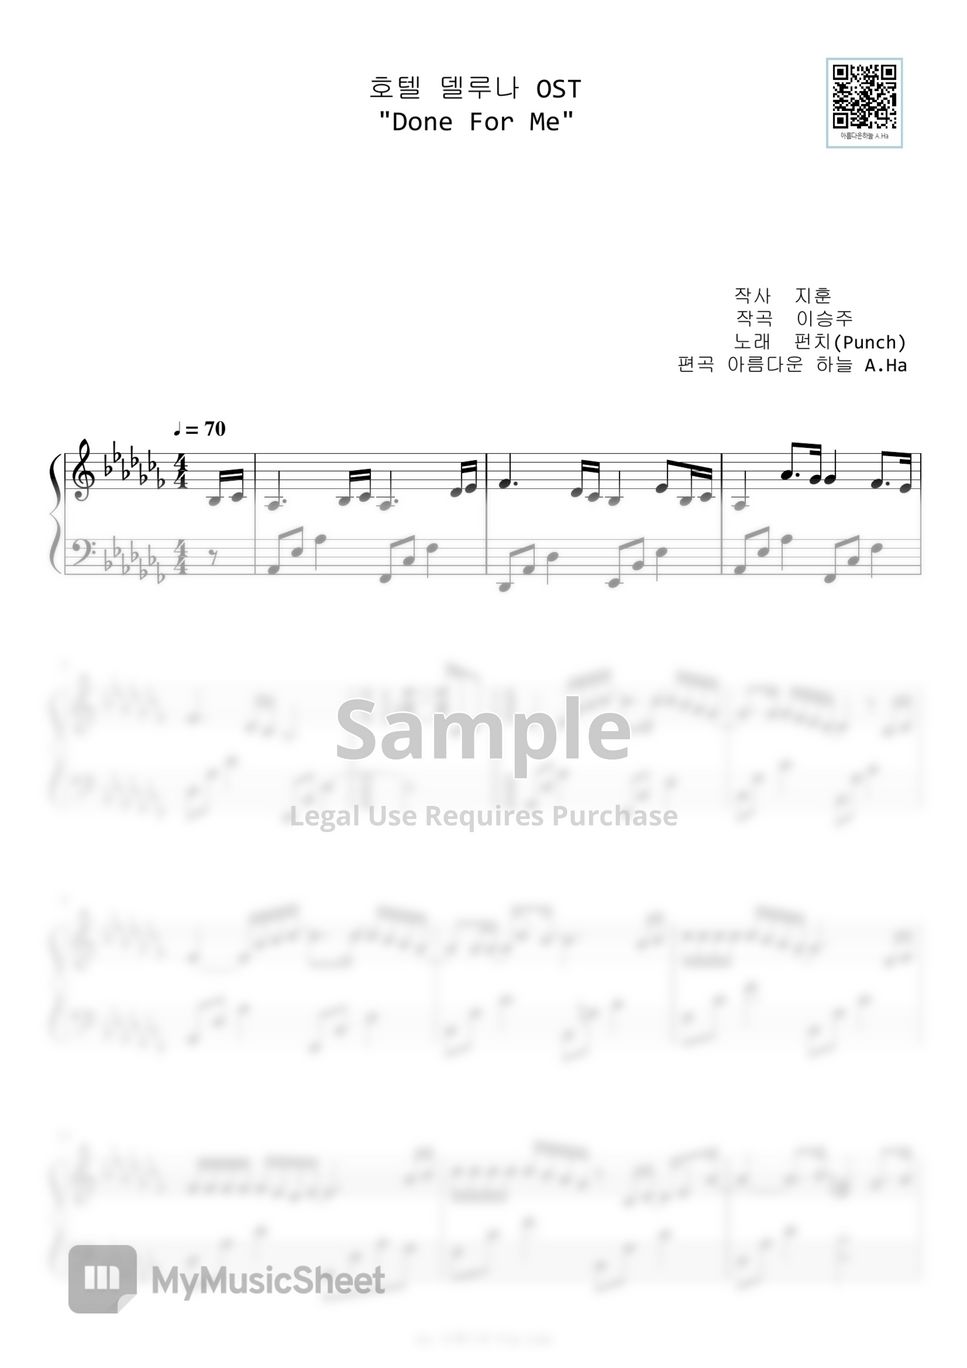 Punch - Hotel Del Luna OST "Done For Me" [ Level 2 - Abm Key ] (Abm Key) by A.Ha